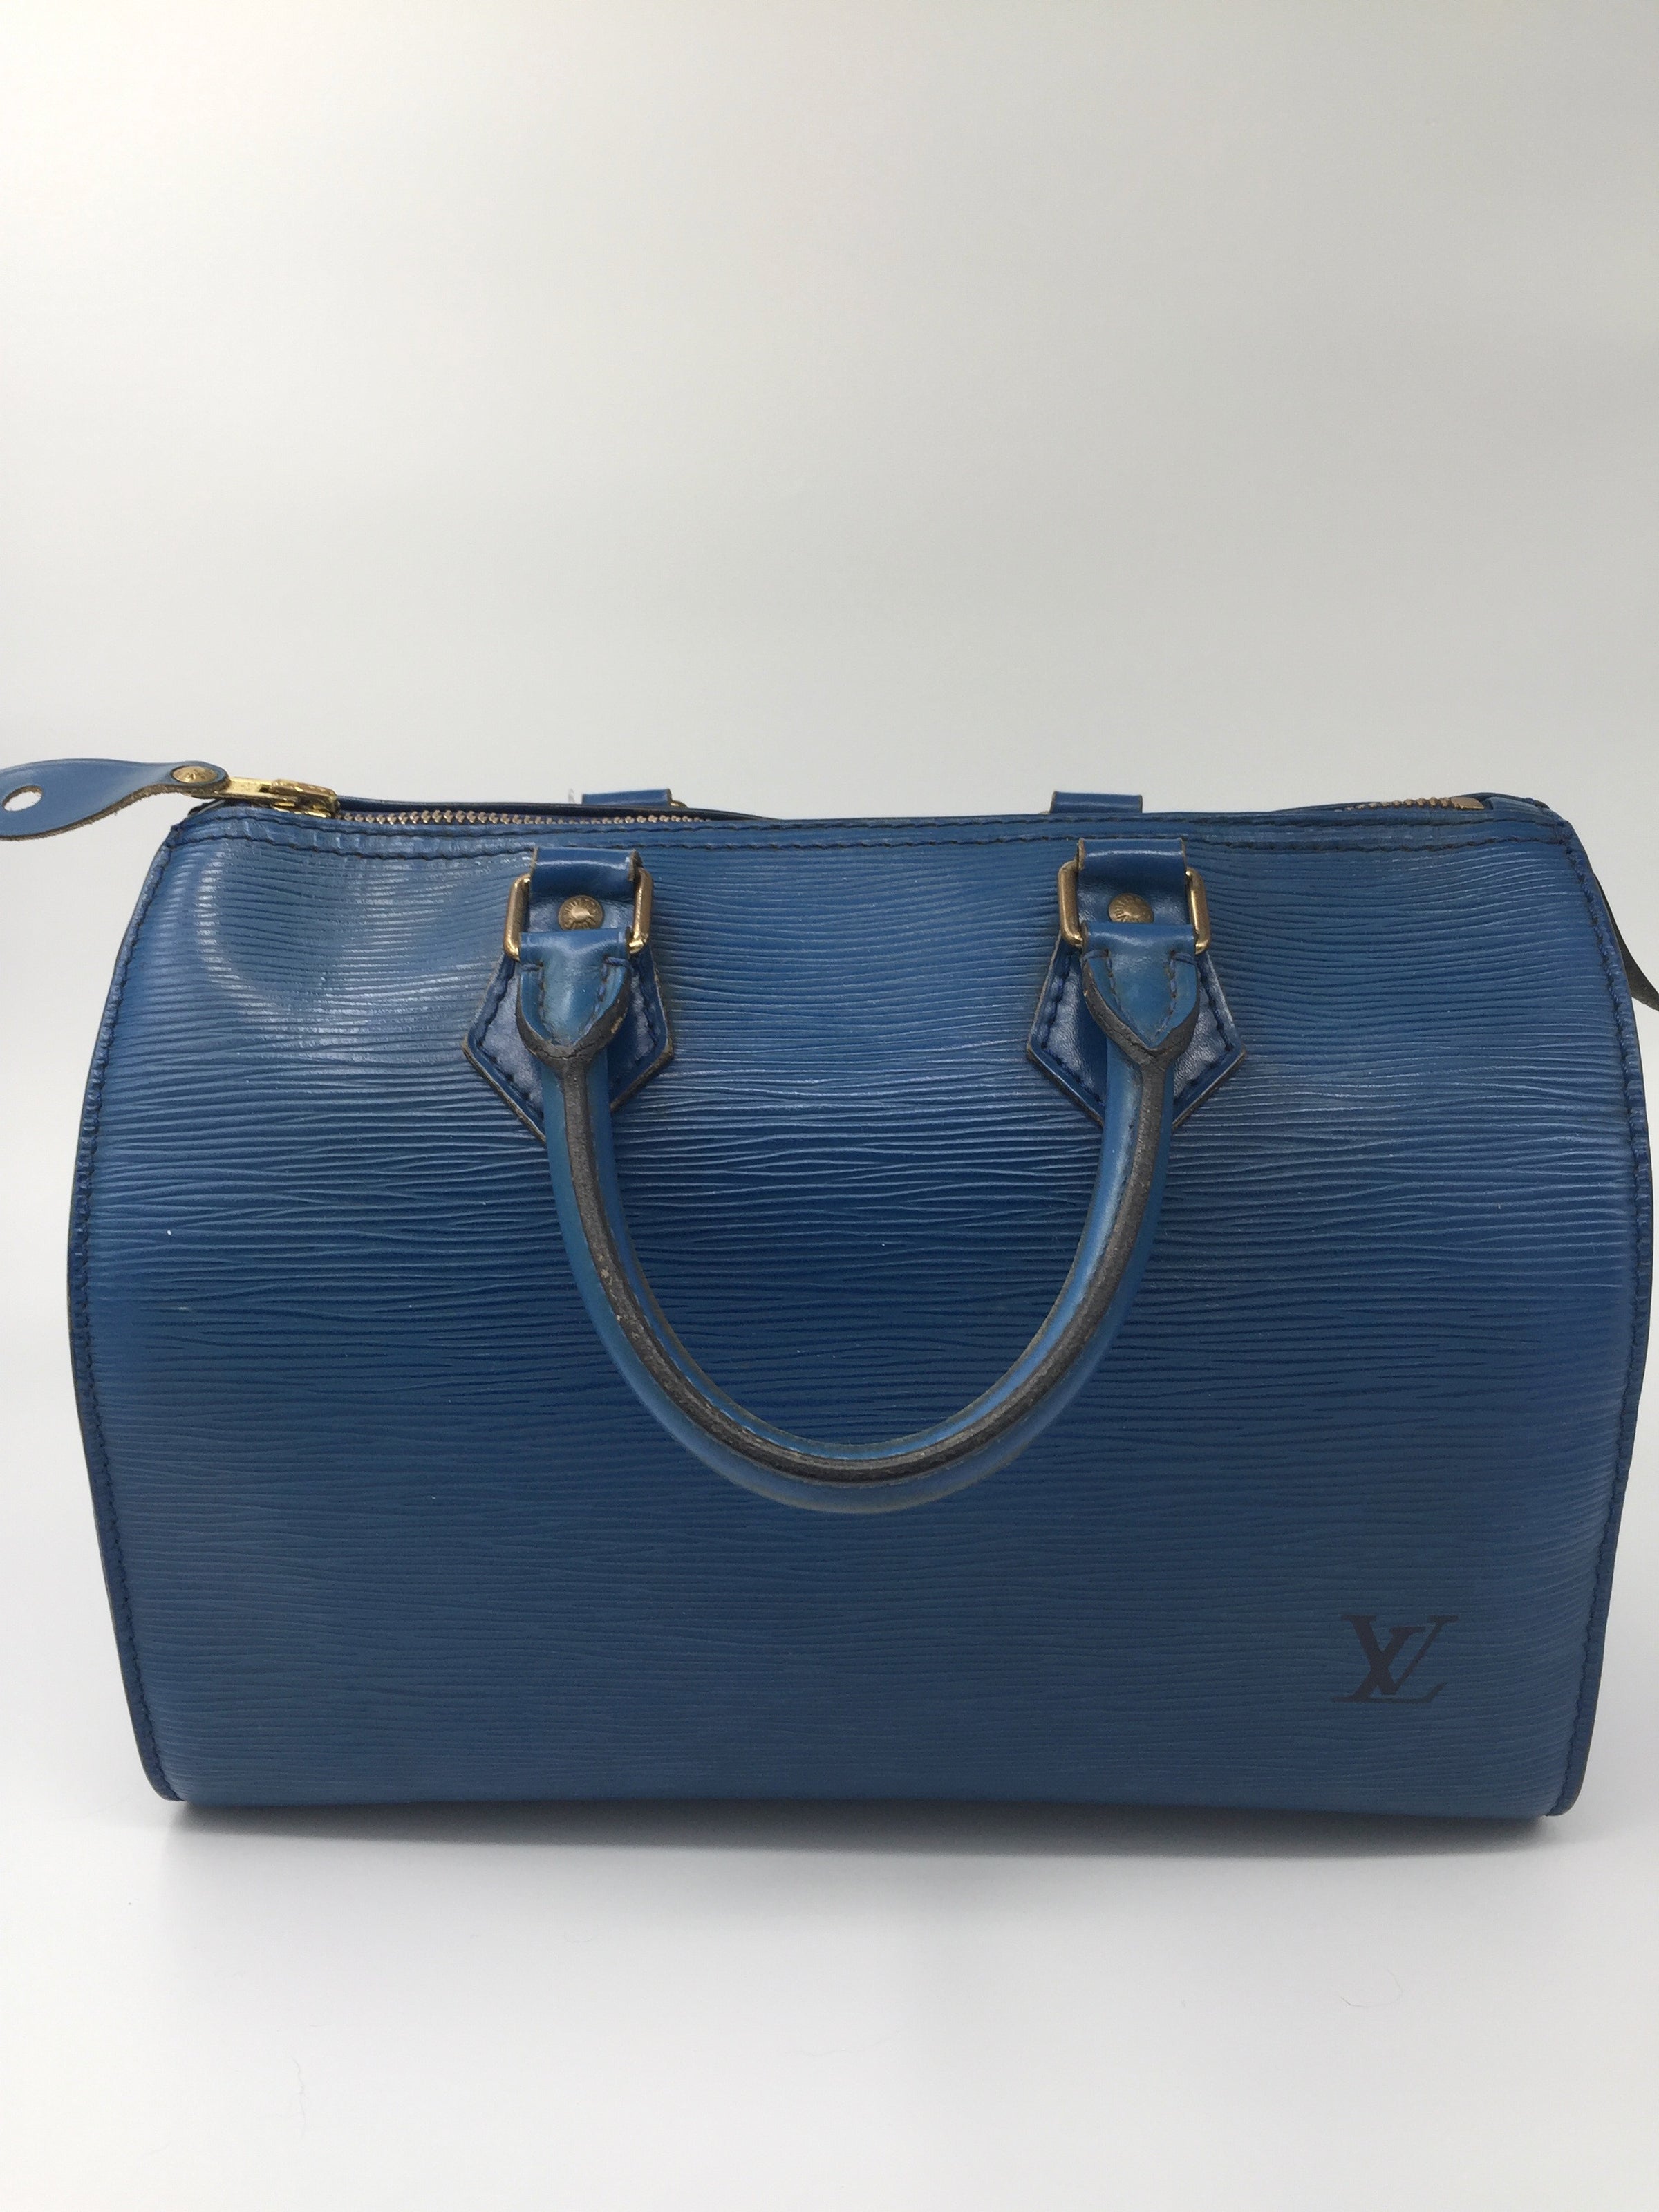 Authentic LOUIS VUITTON epi speedy 25 handbag Blue Used M43015